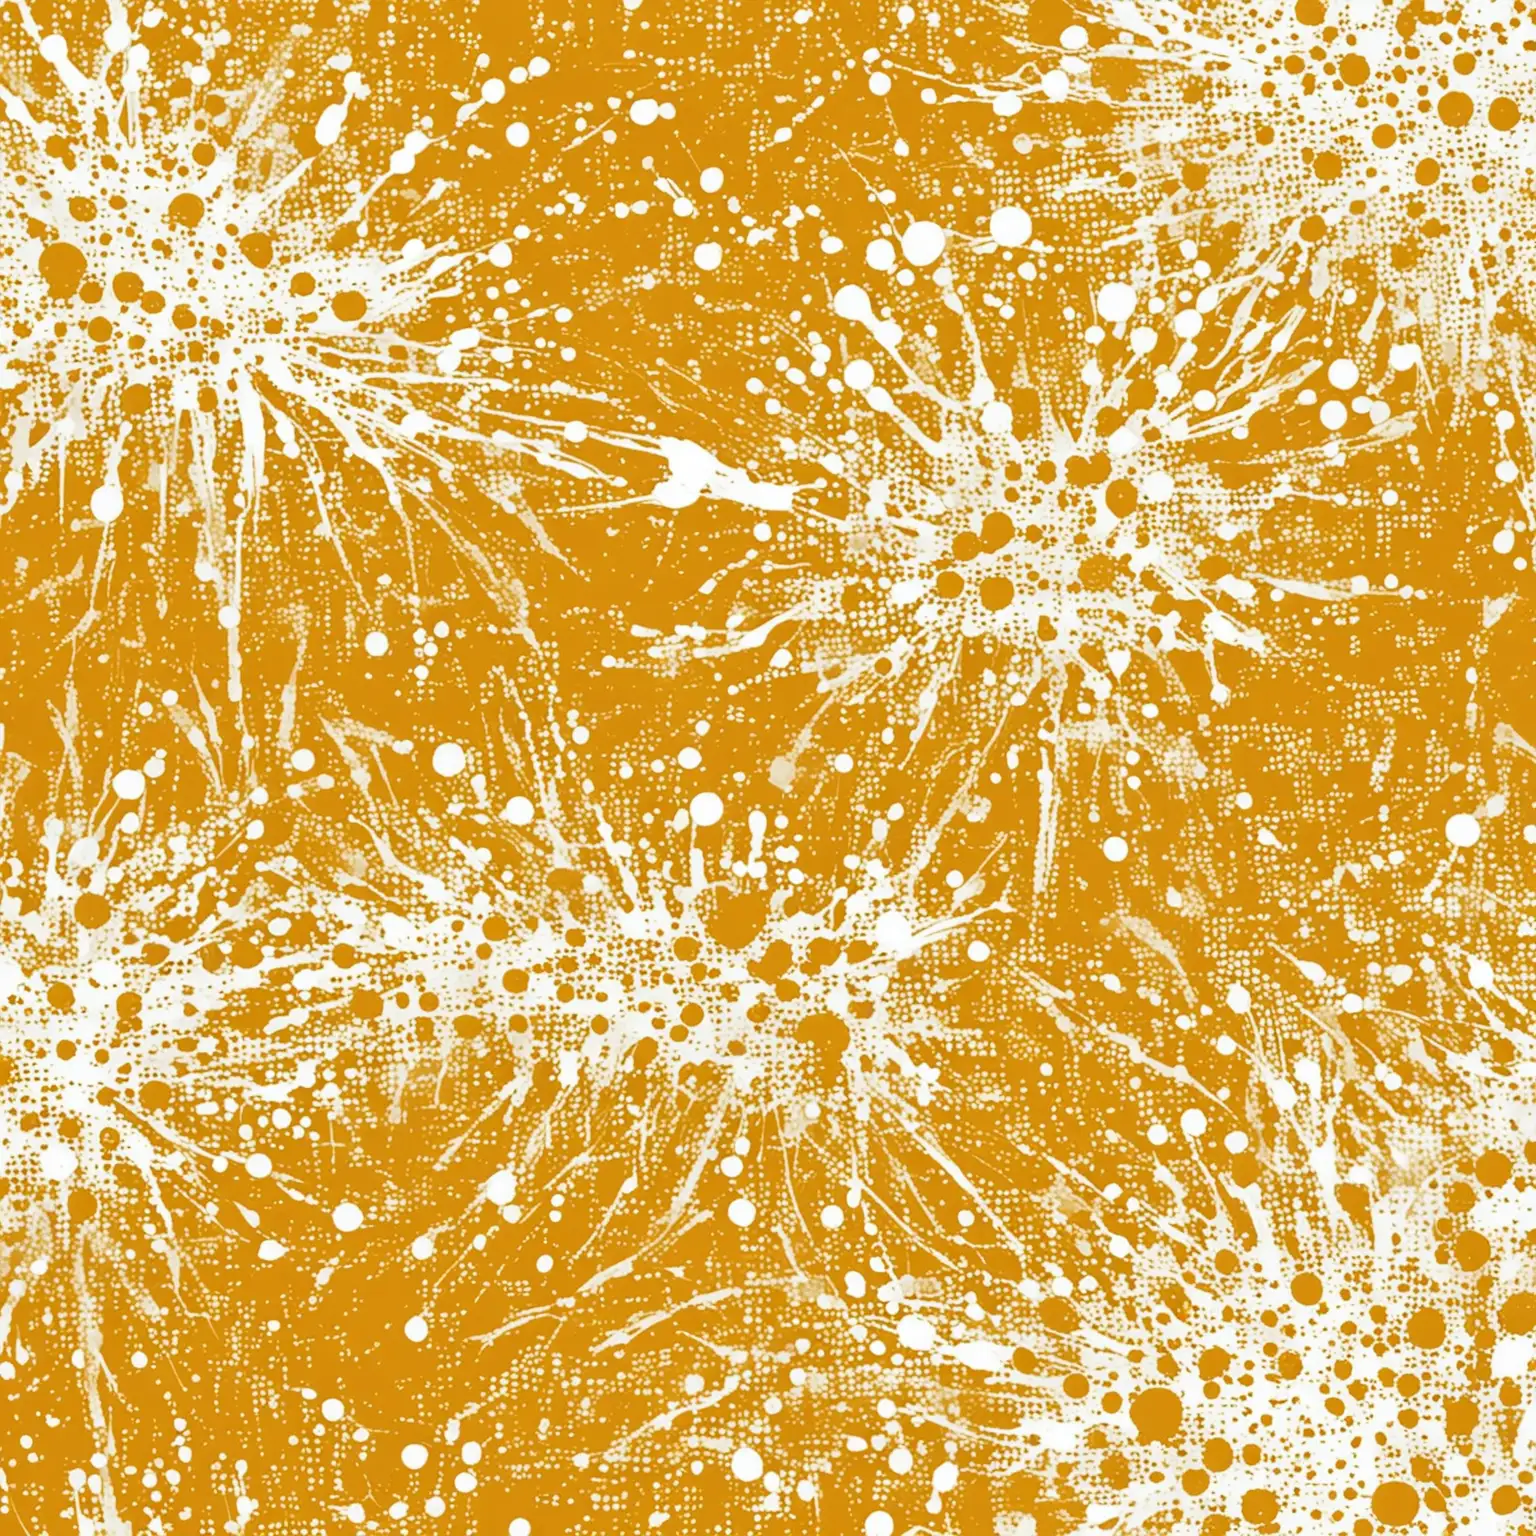 Abstract Mustard and White Splatter Background Digital Art